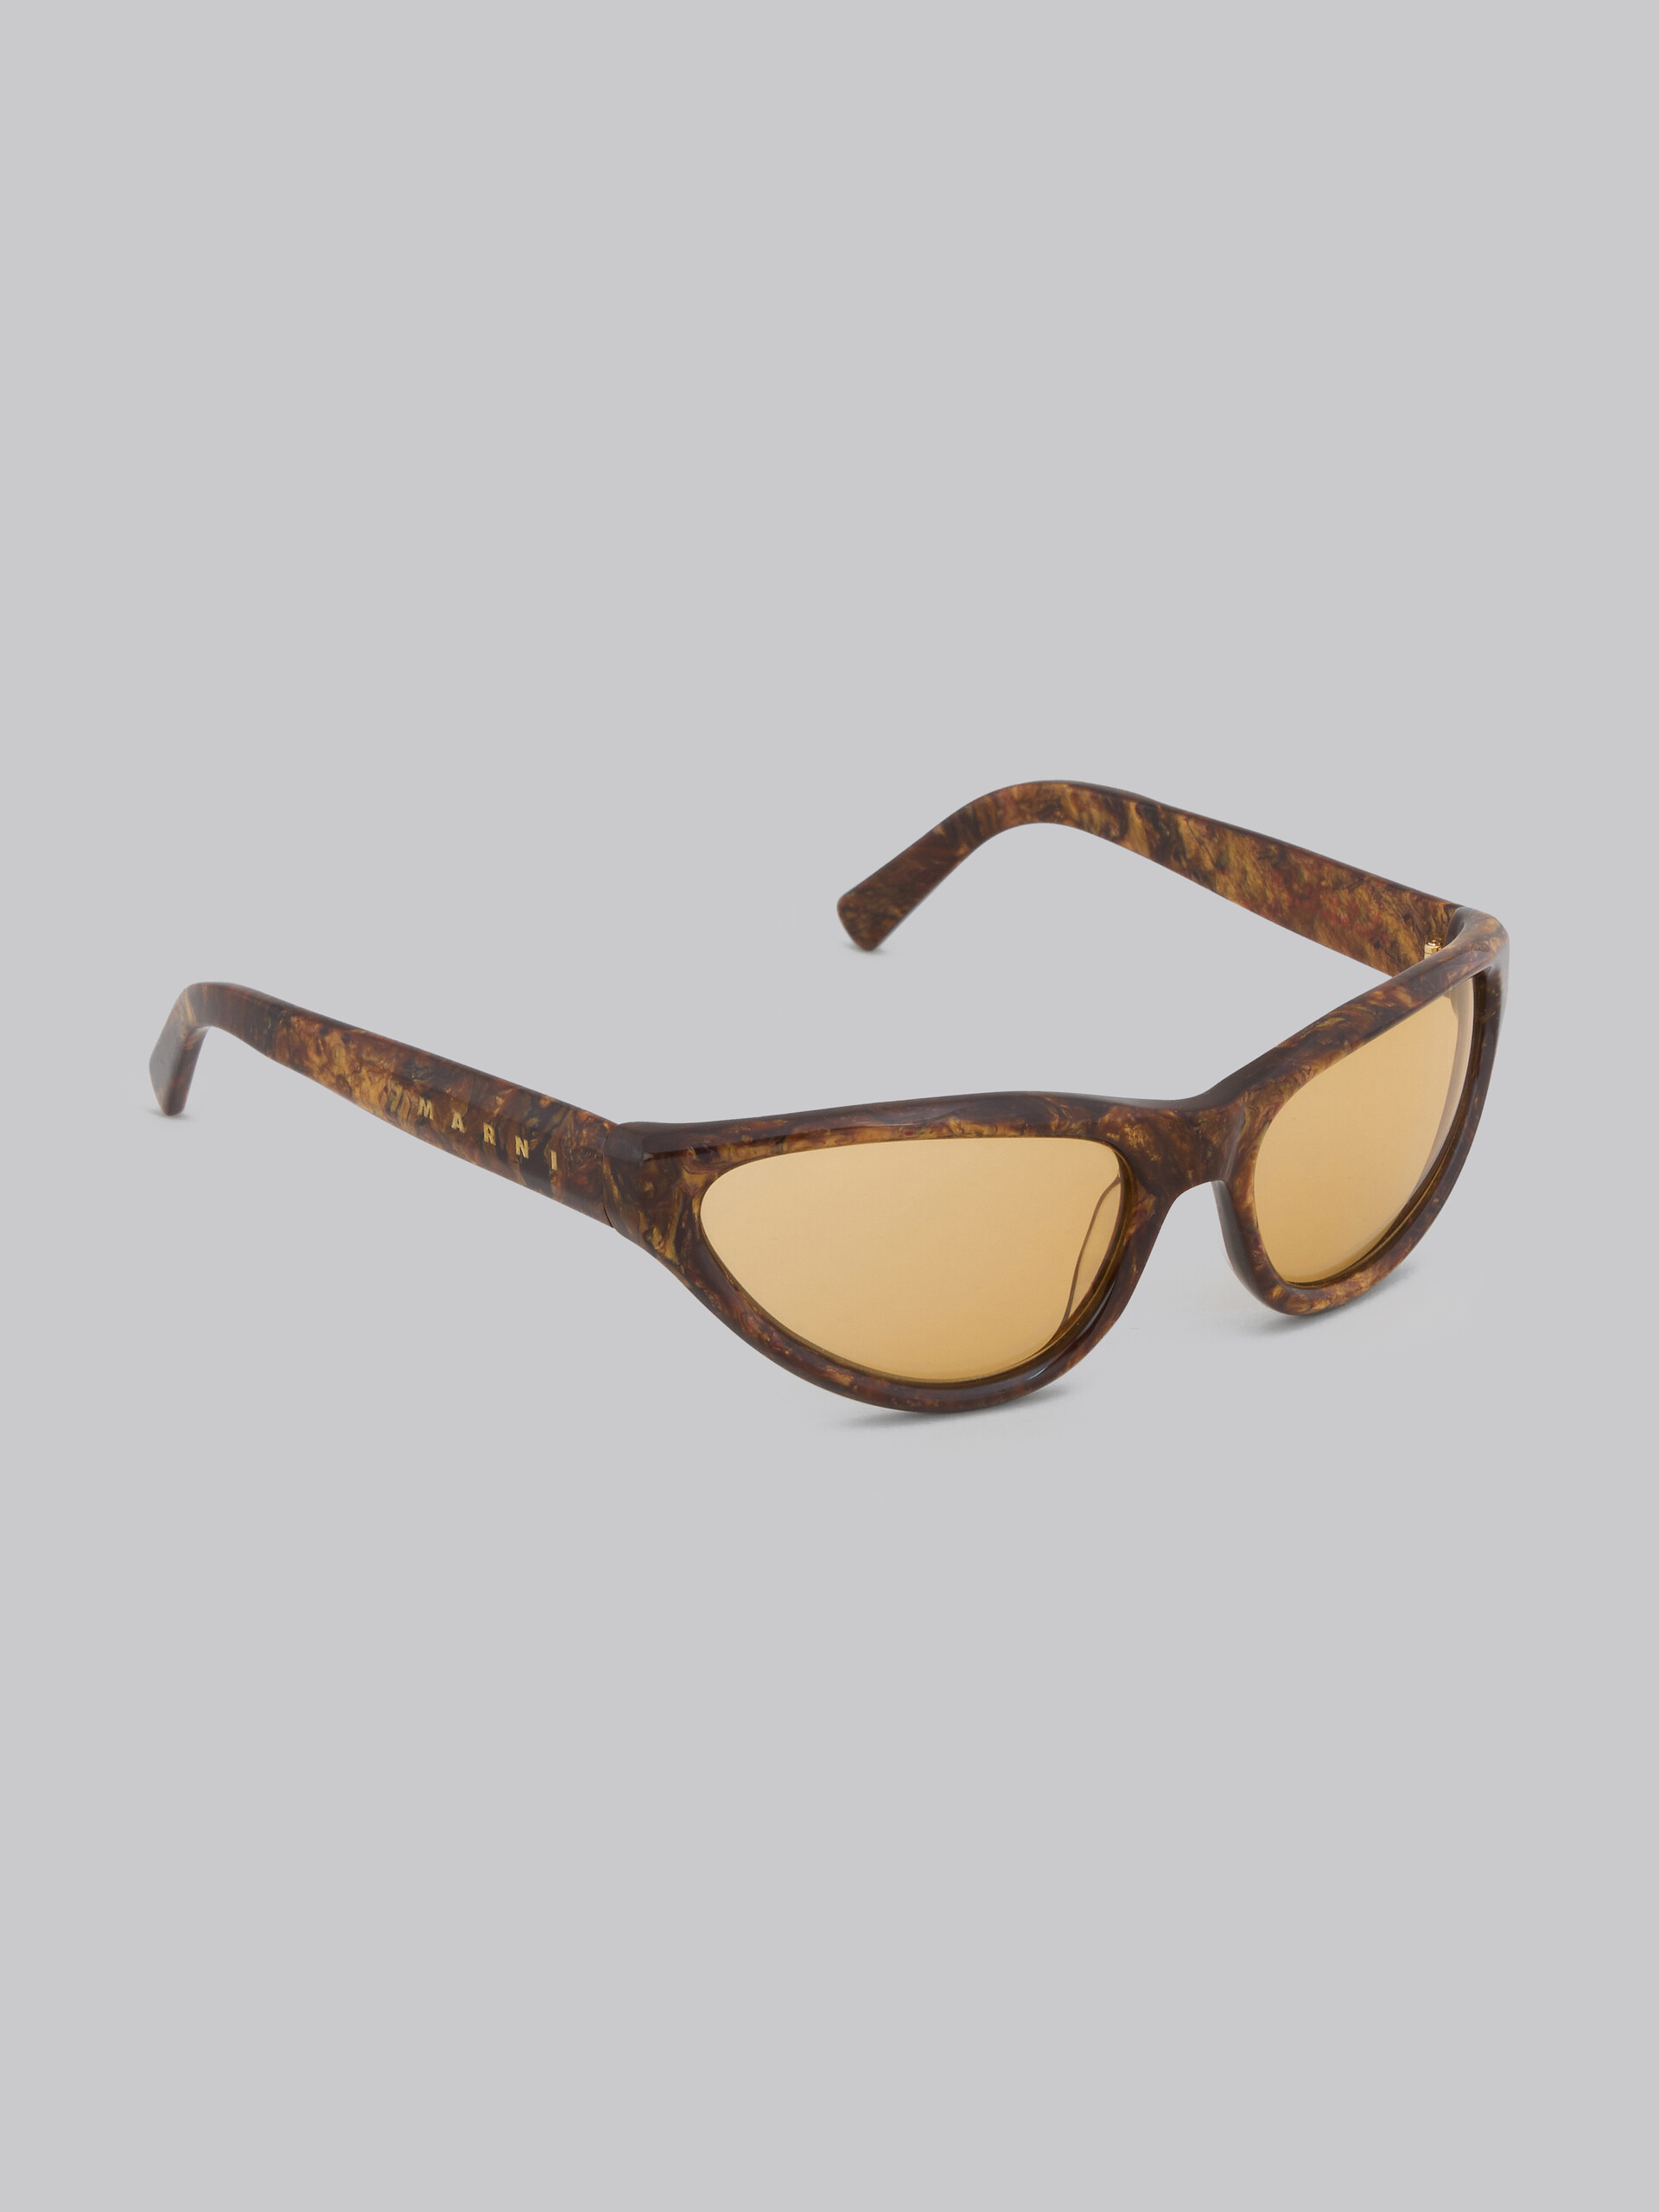 Mavericks black sunglasses - Optical - Image 3